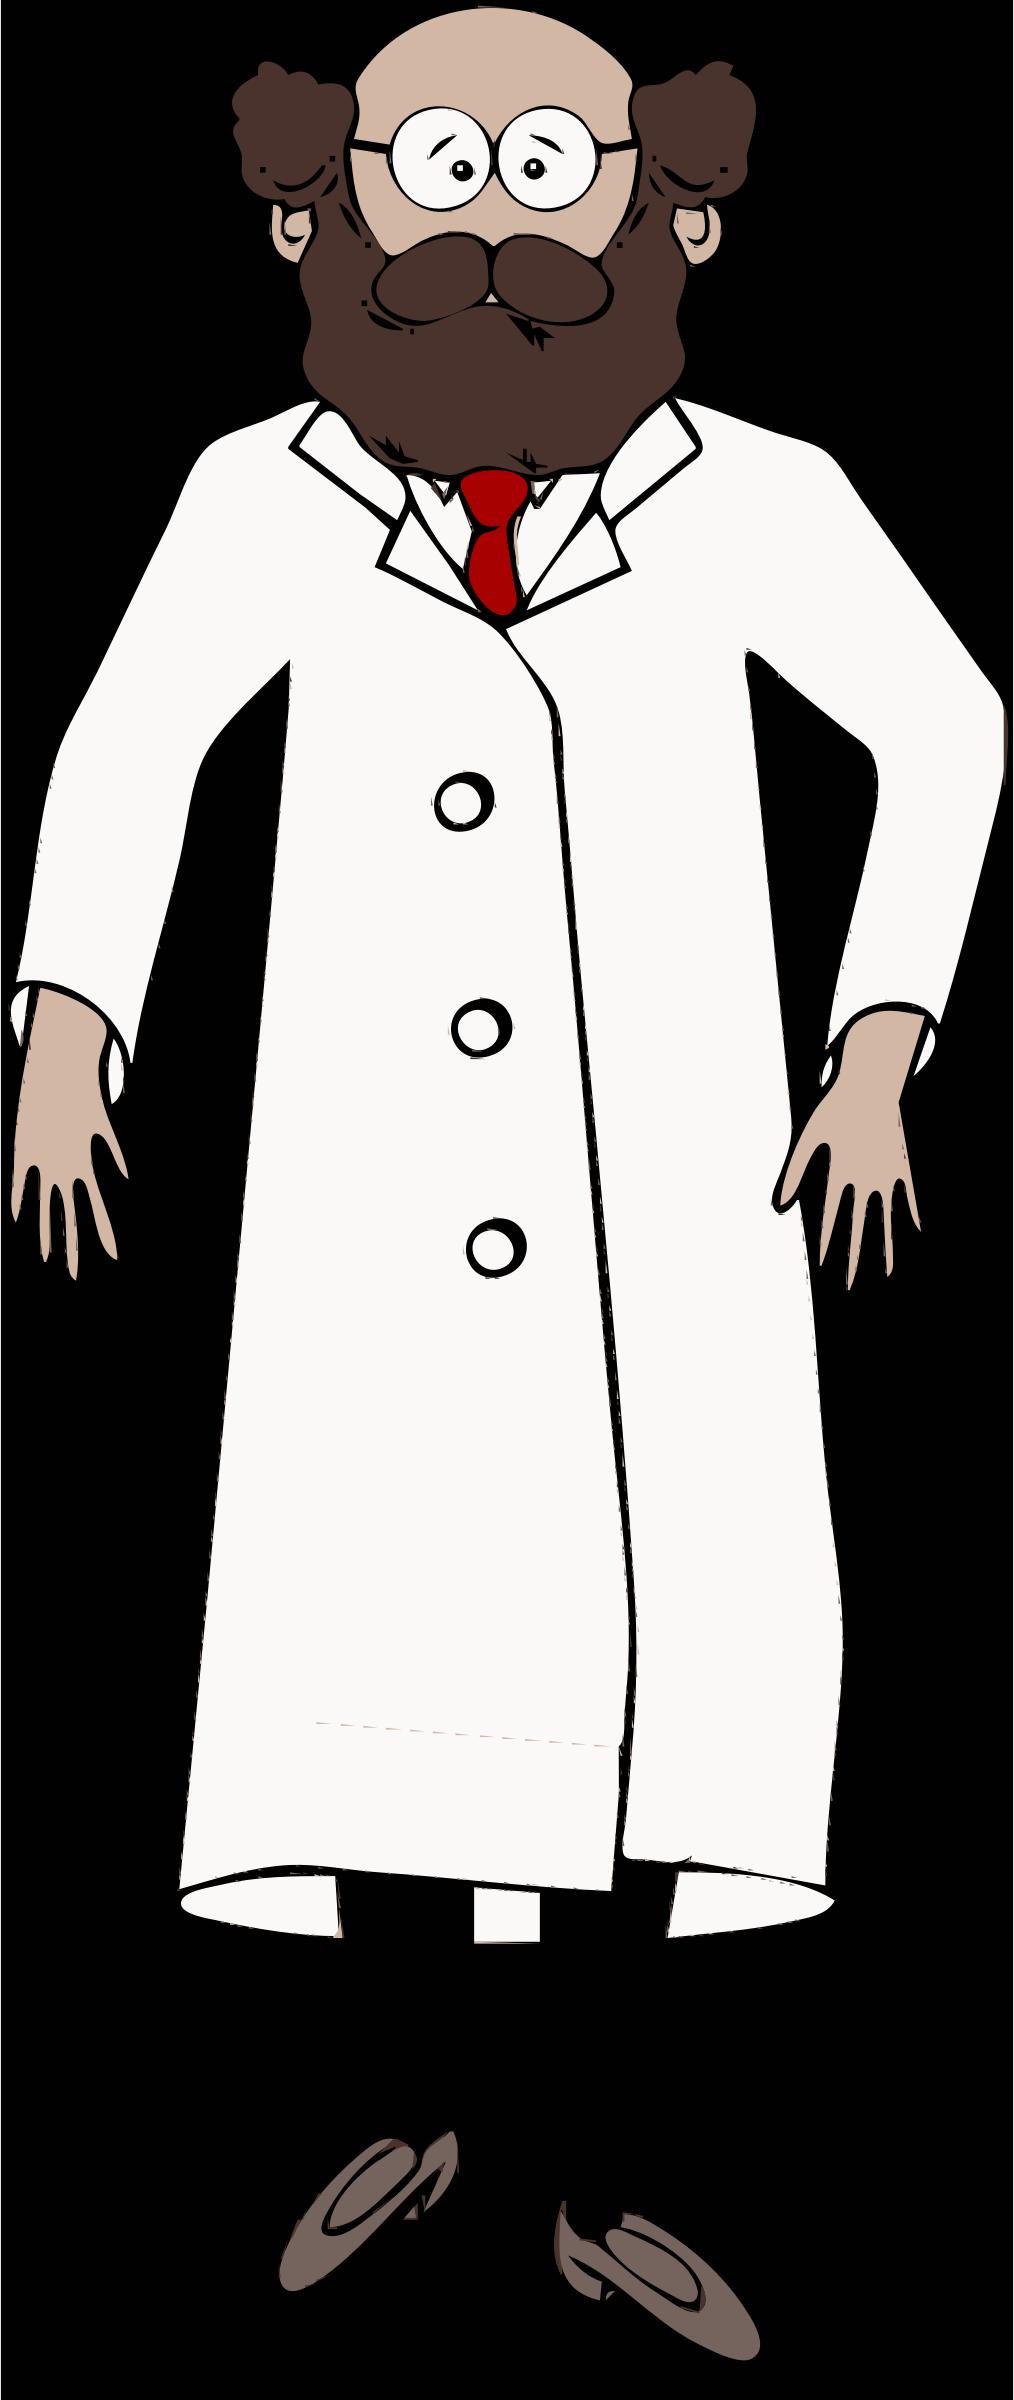 lab coat worn by scientist png